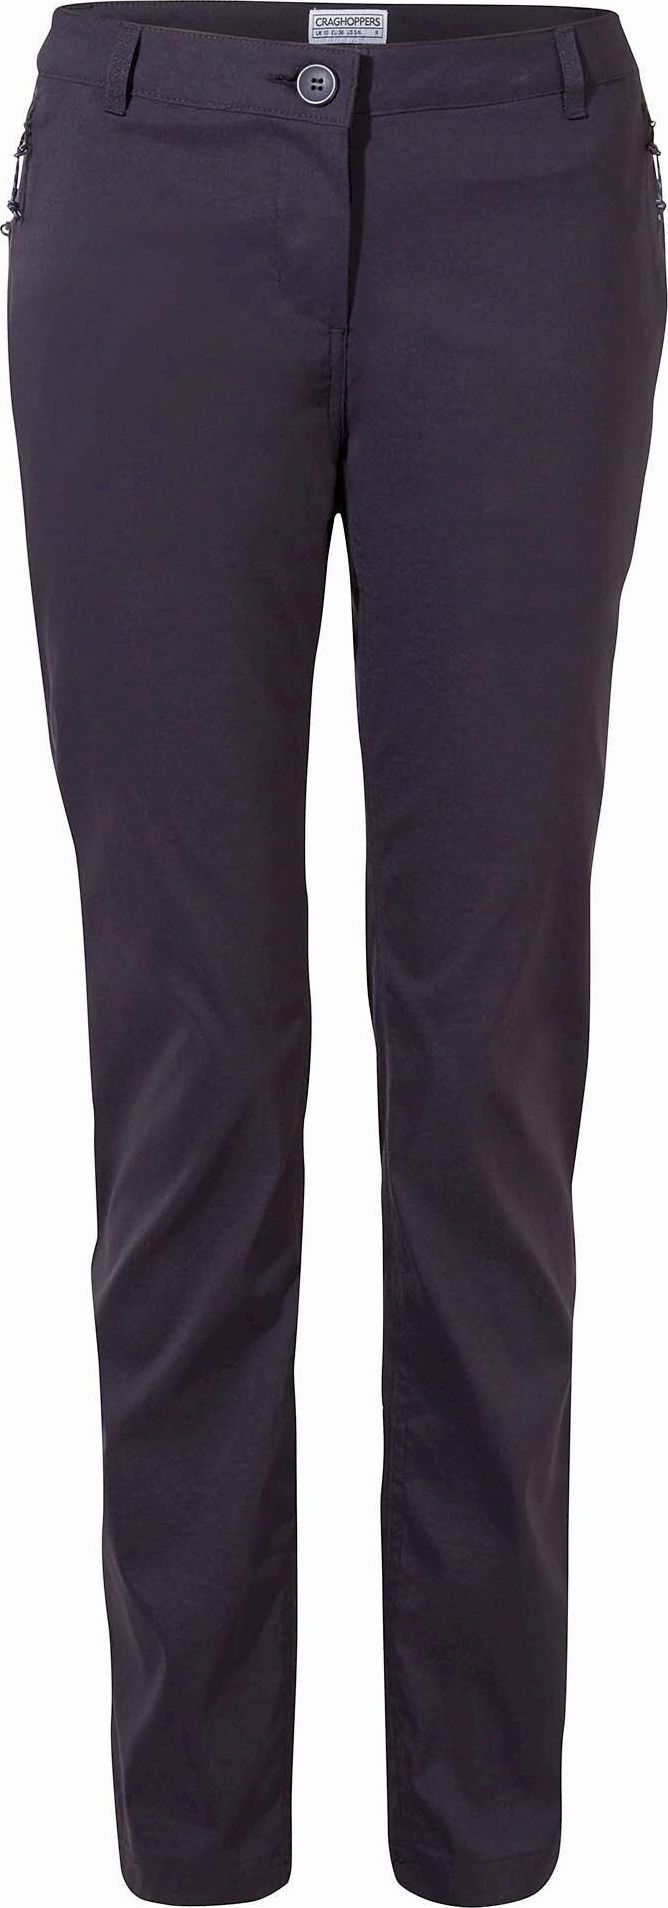 https://www.fjellsport.no/assets/blobs/craghoppers-women-s-kiwi-pro-ii-trousers-dark-navy-437689403e.jpeg?preset=tiny&dpr=2